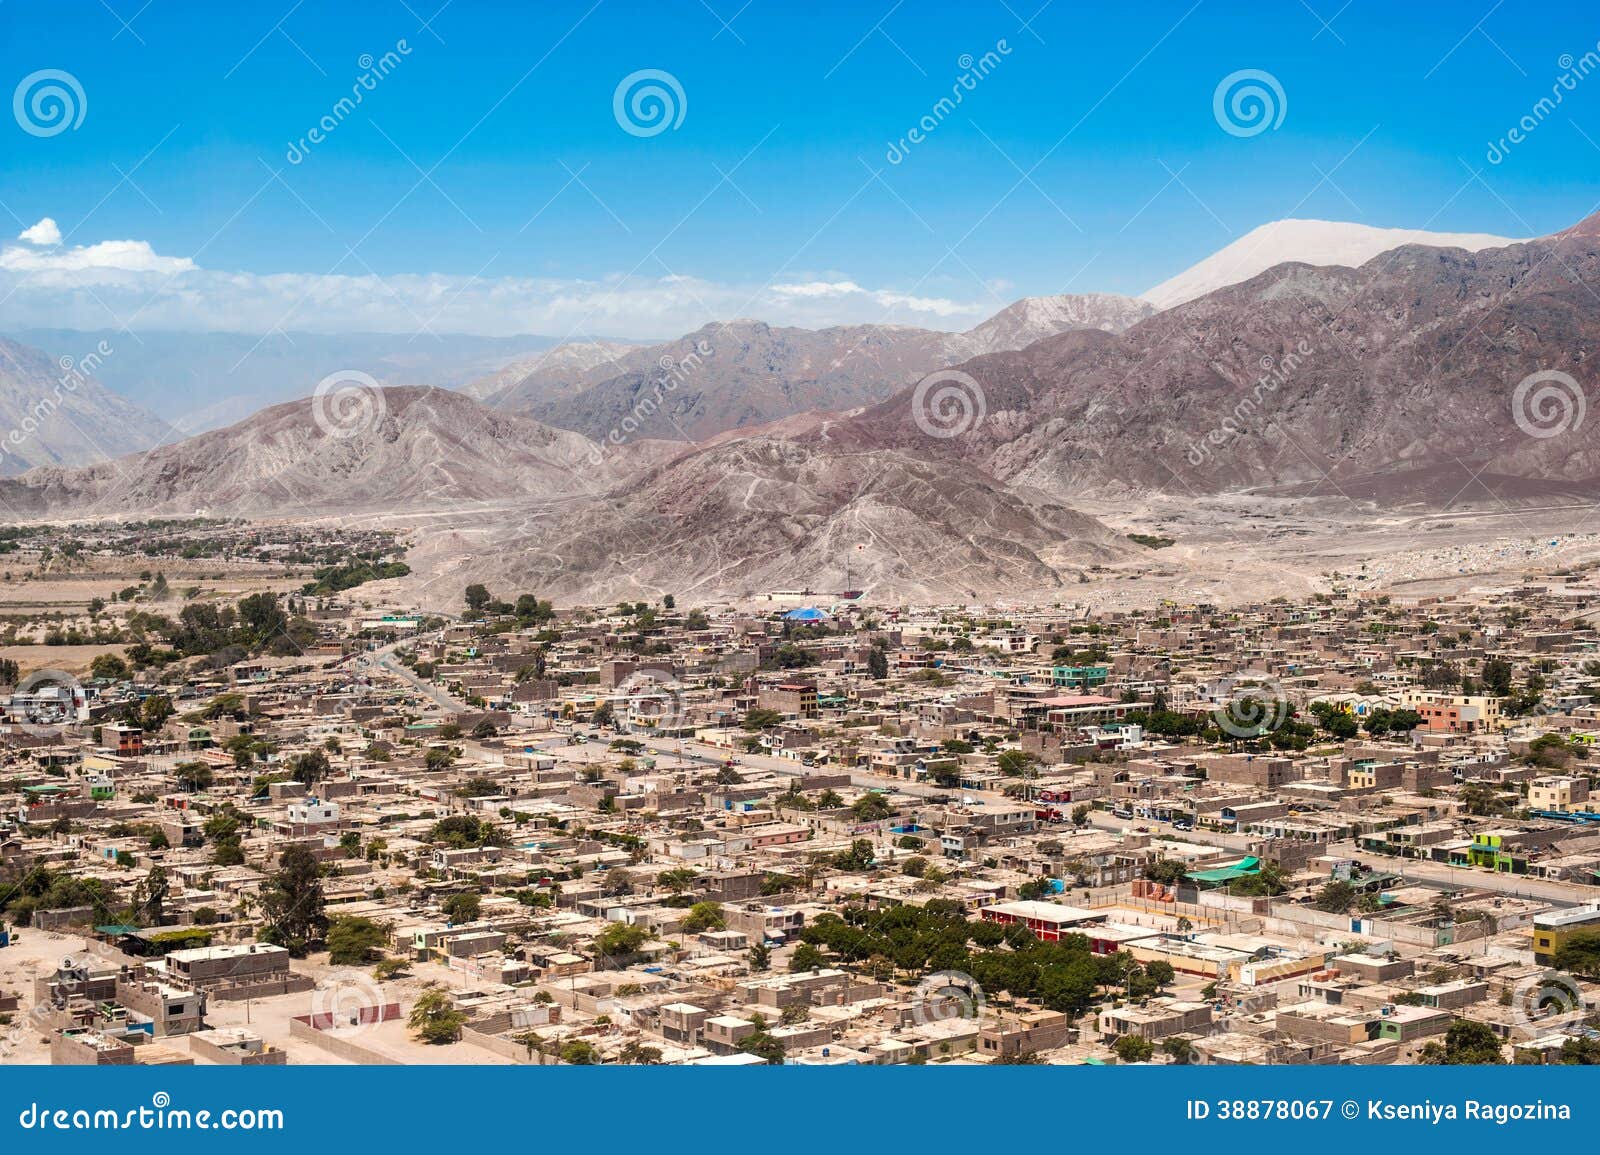 city of nazca, peru